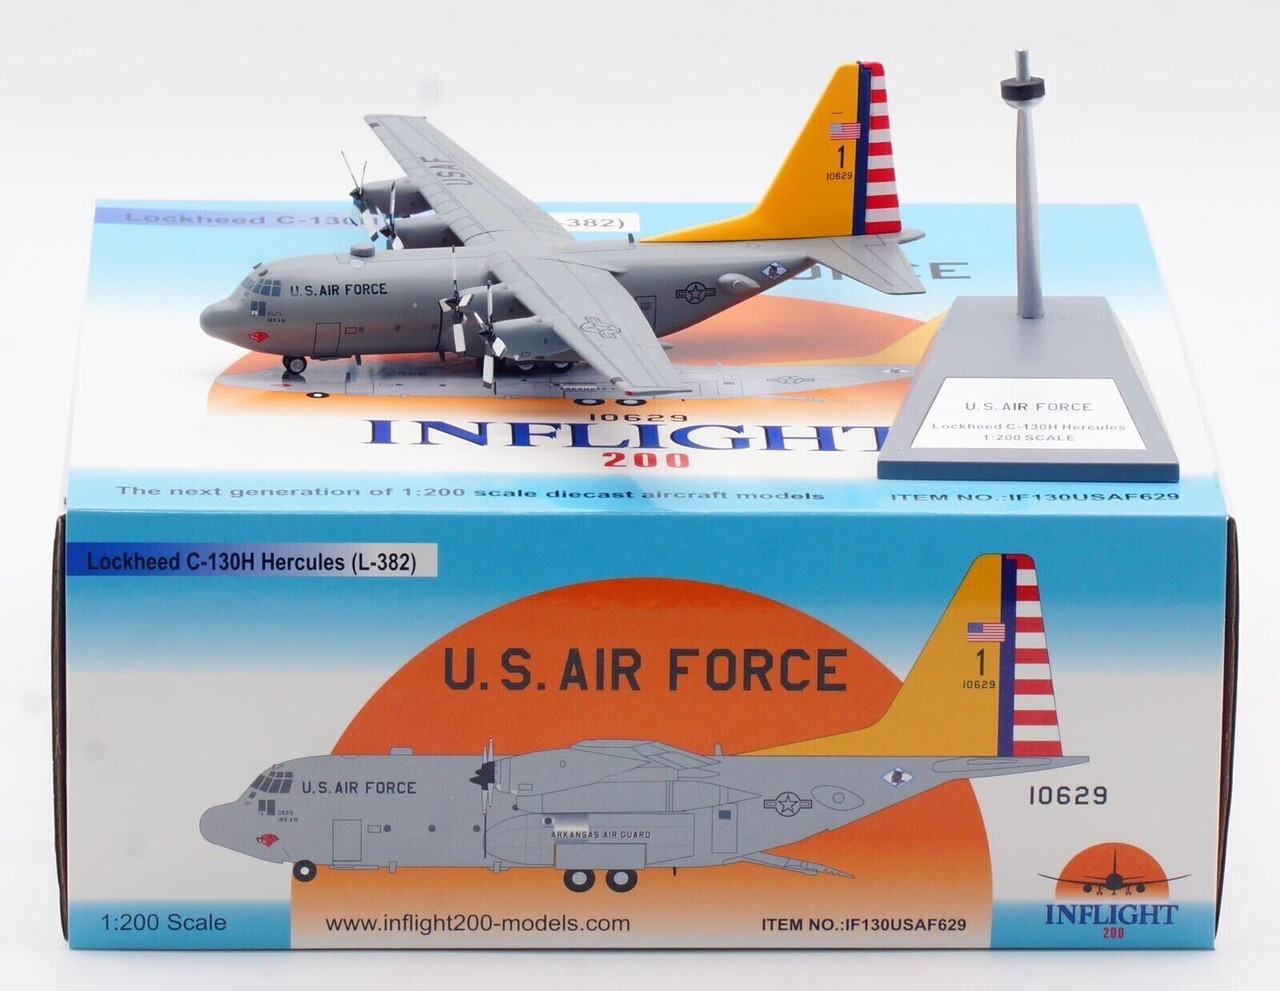 Inflight200 USAF C-130H - 81-0629